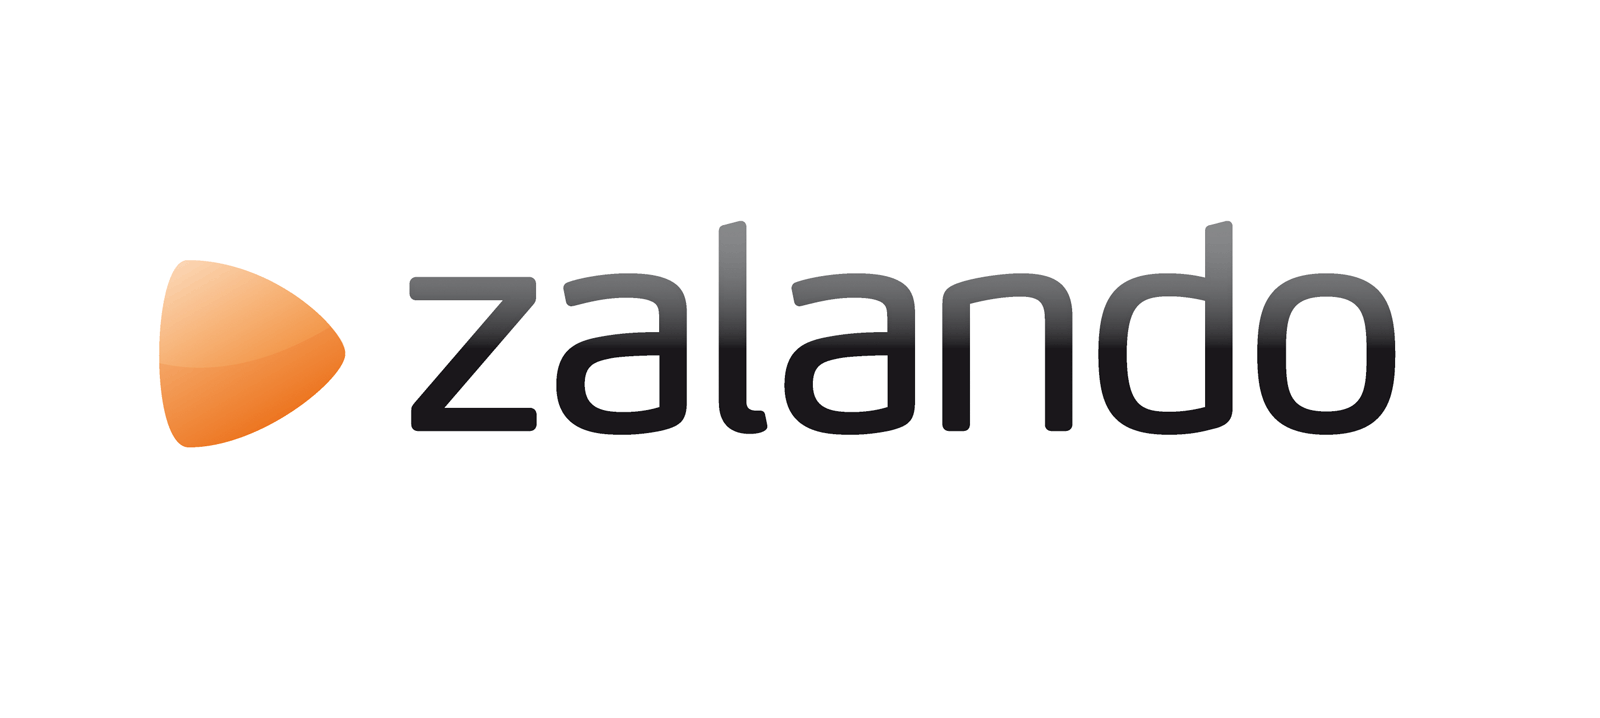 Zalando â€“ Marketing at its best!